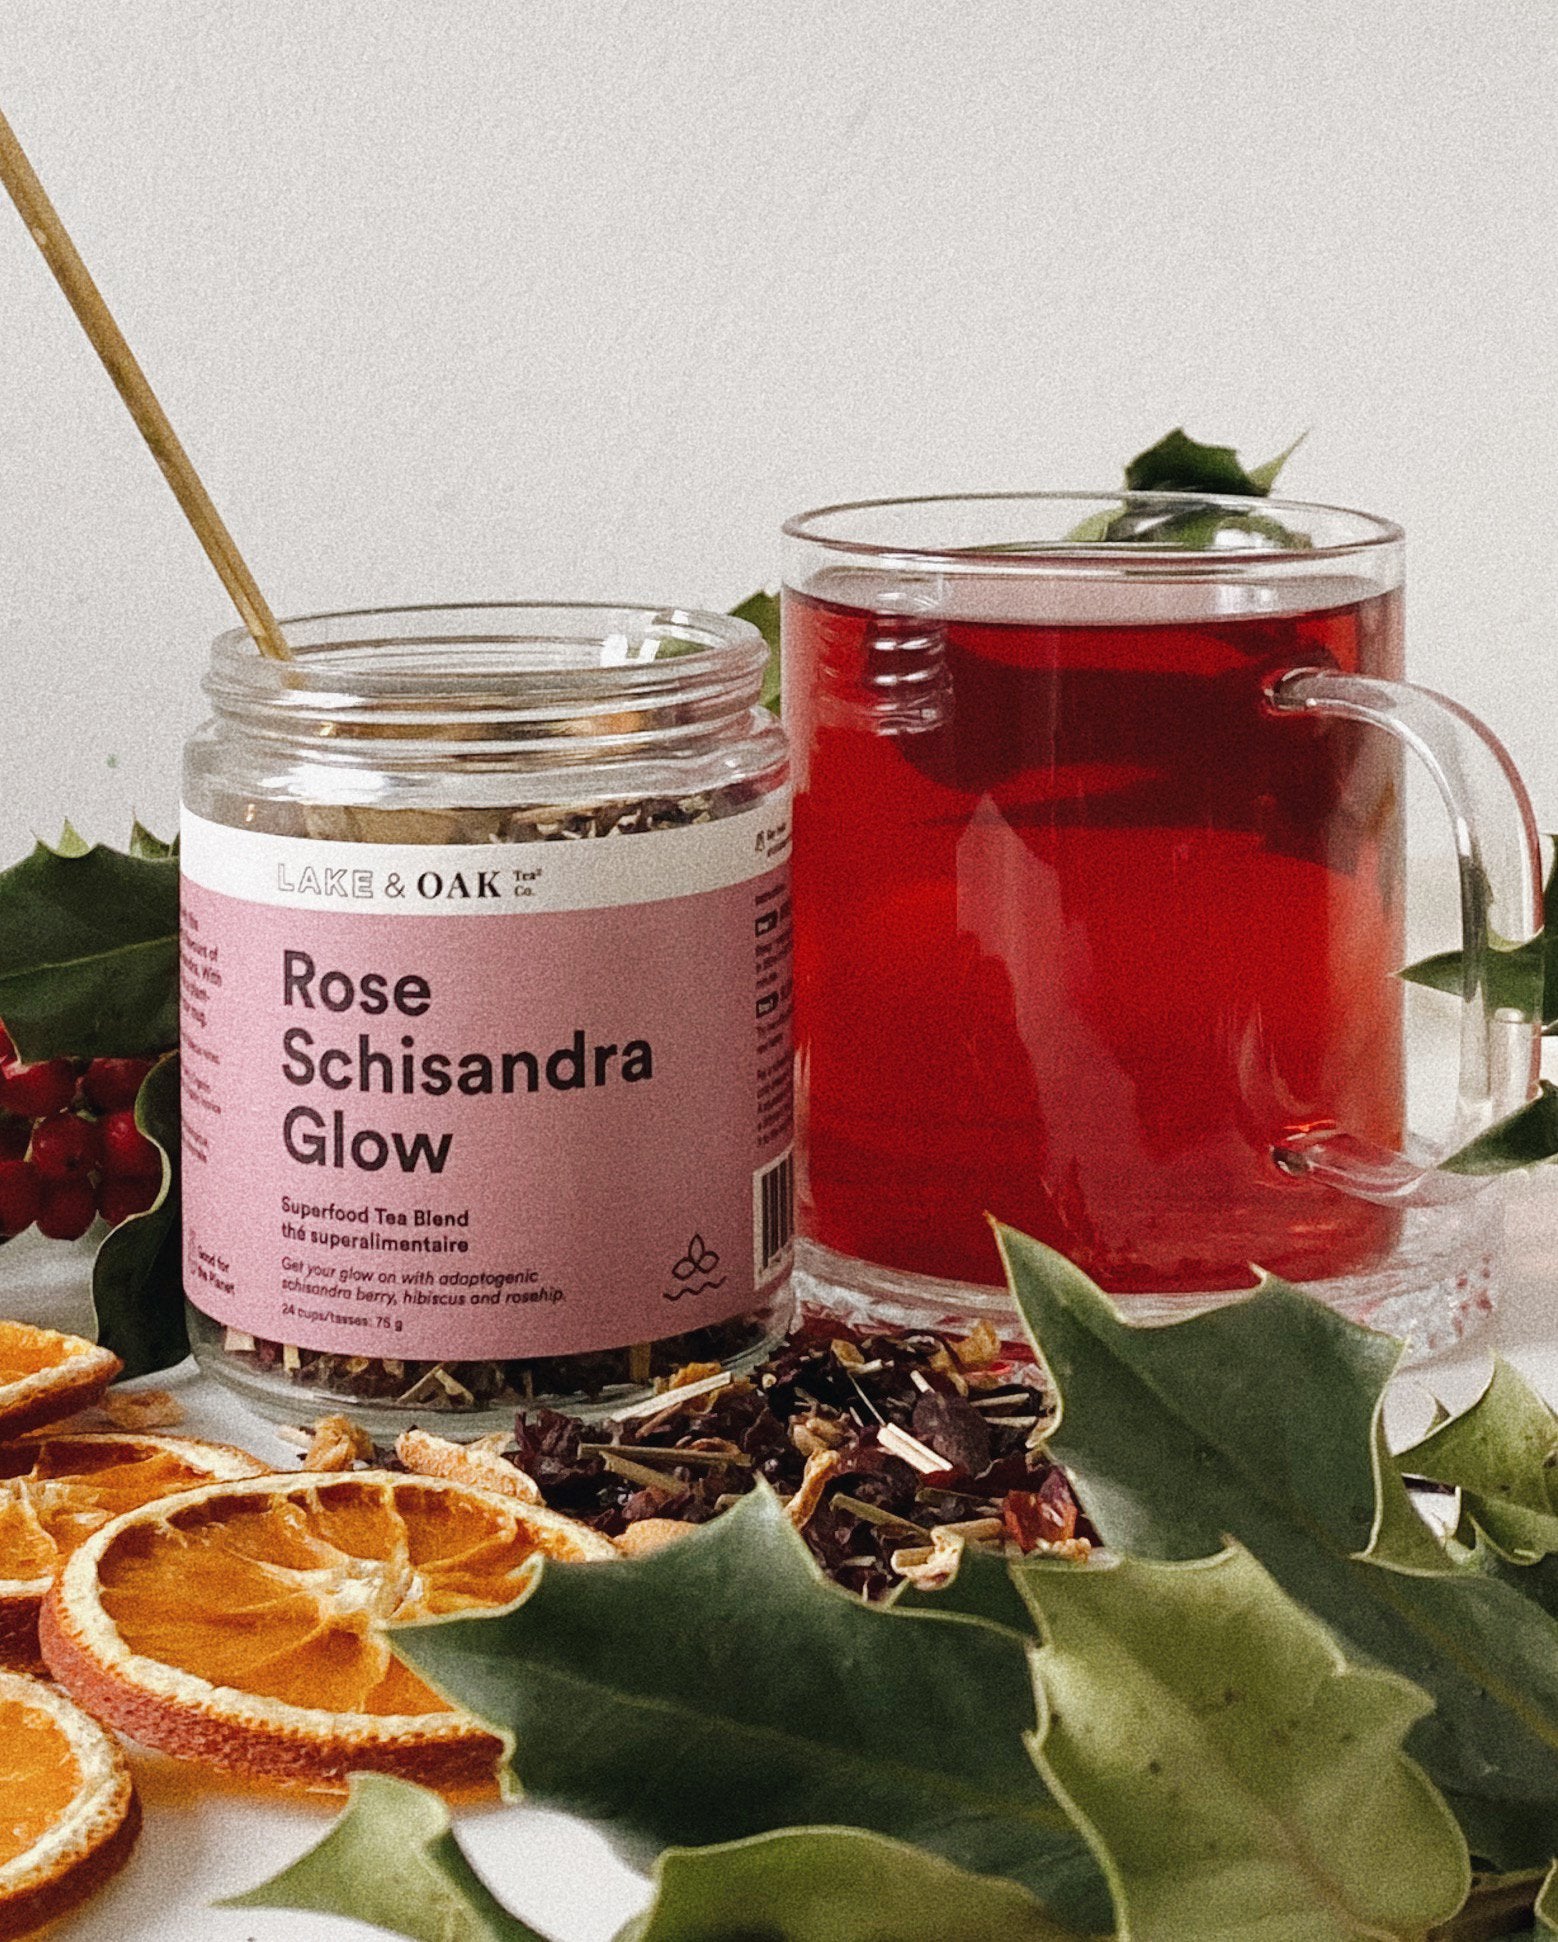 Rose Schisandra Glow - Superfood Tea Blend